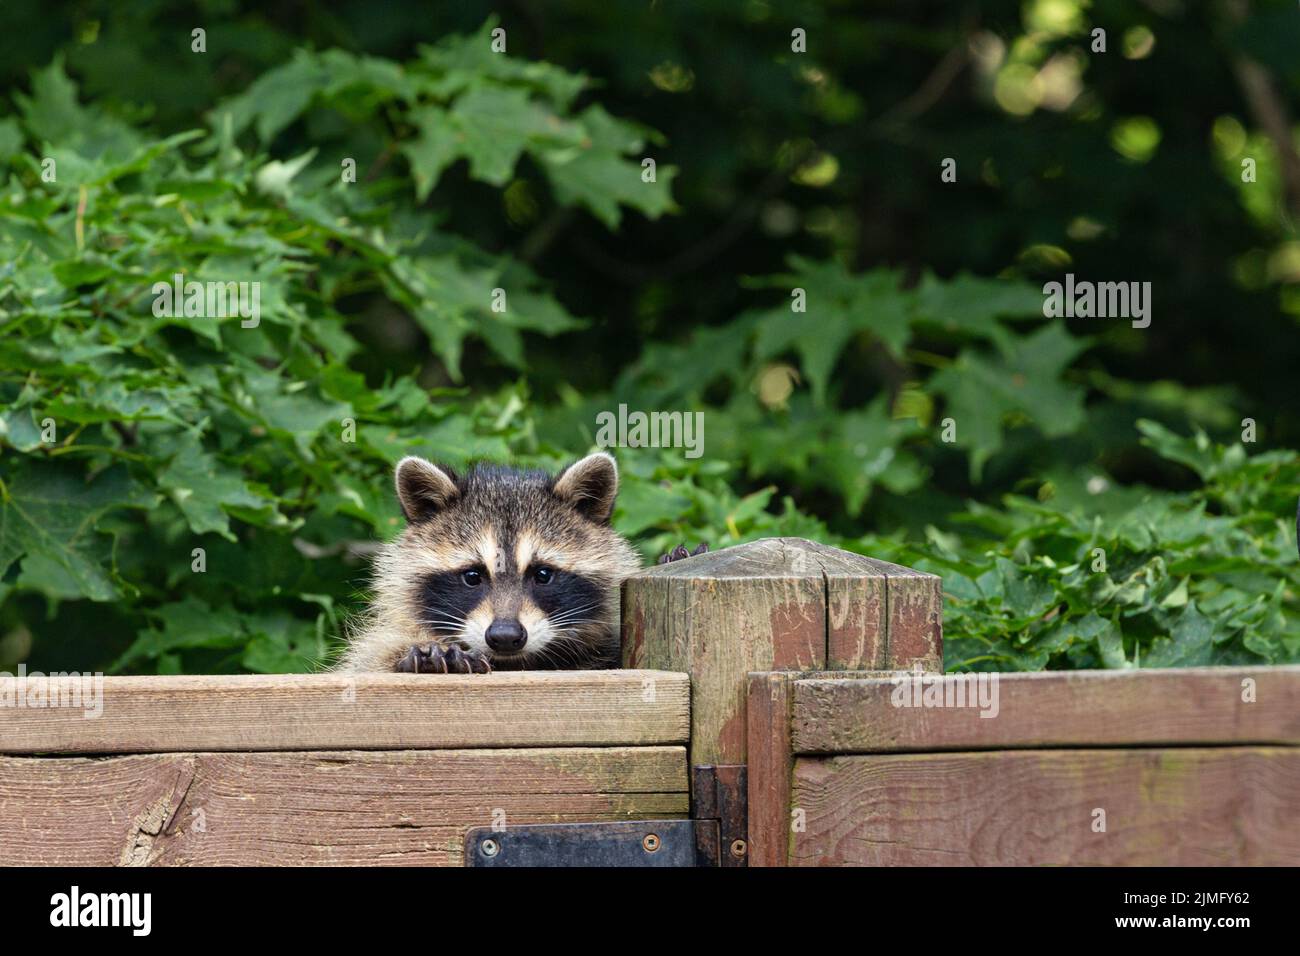 Baby raccoon peeking over a wooden deck railing. Stock Photo